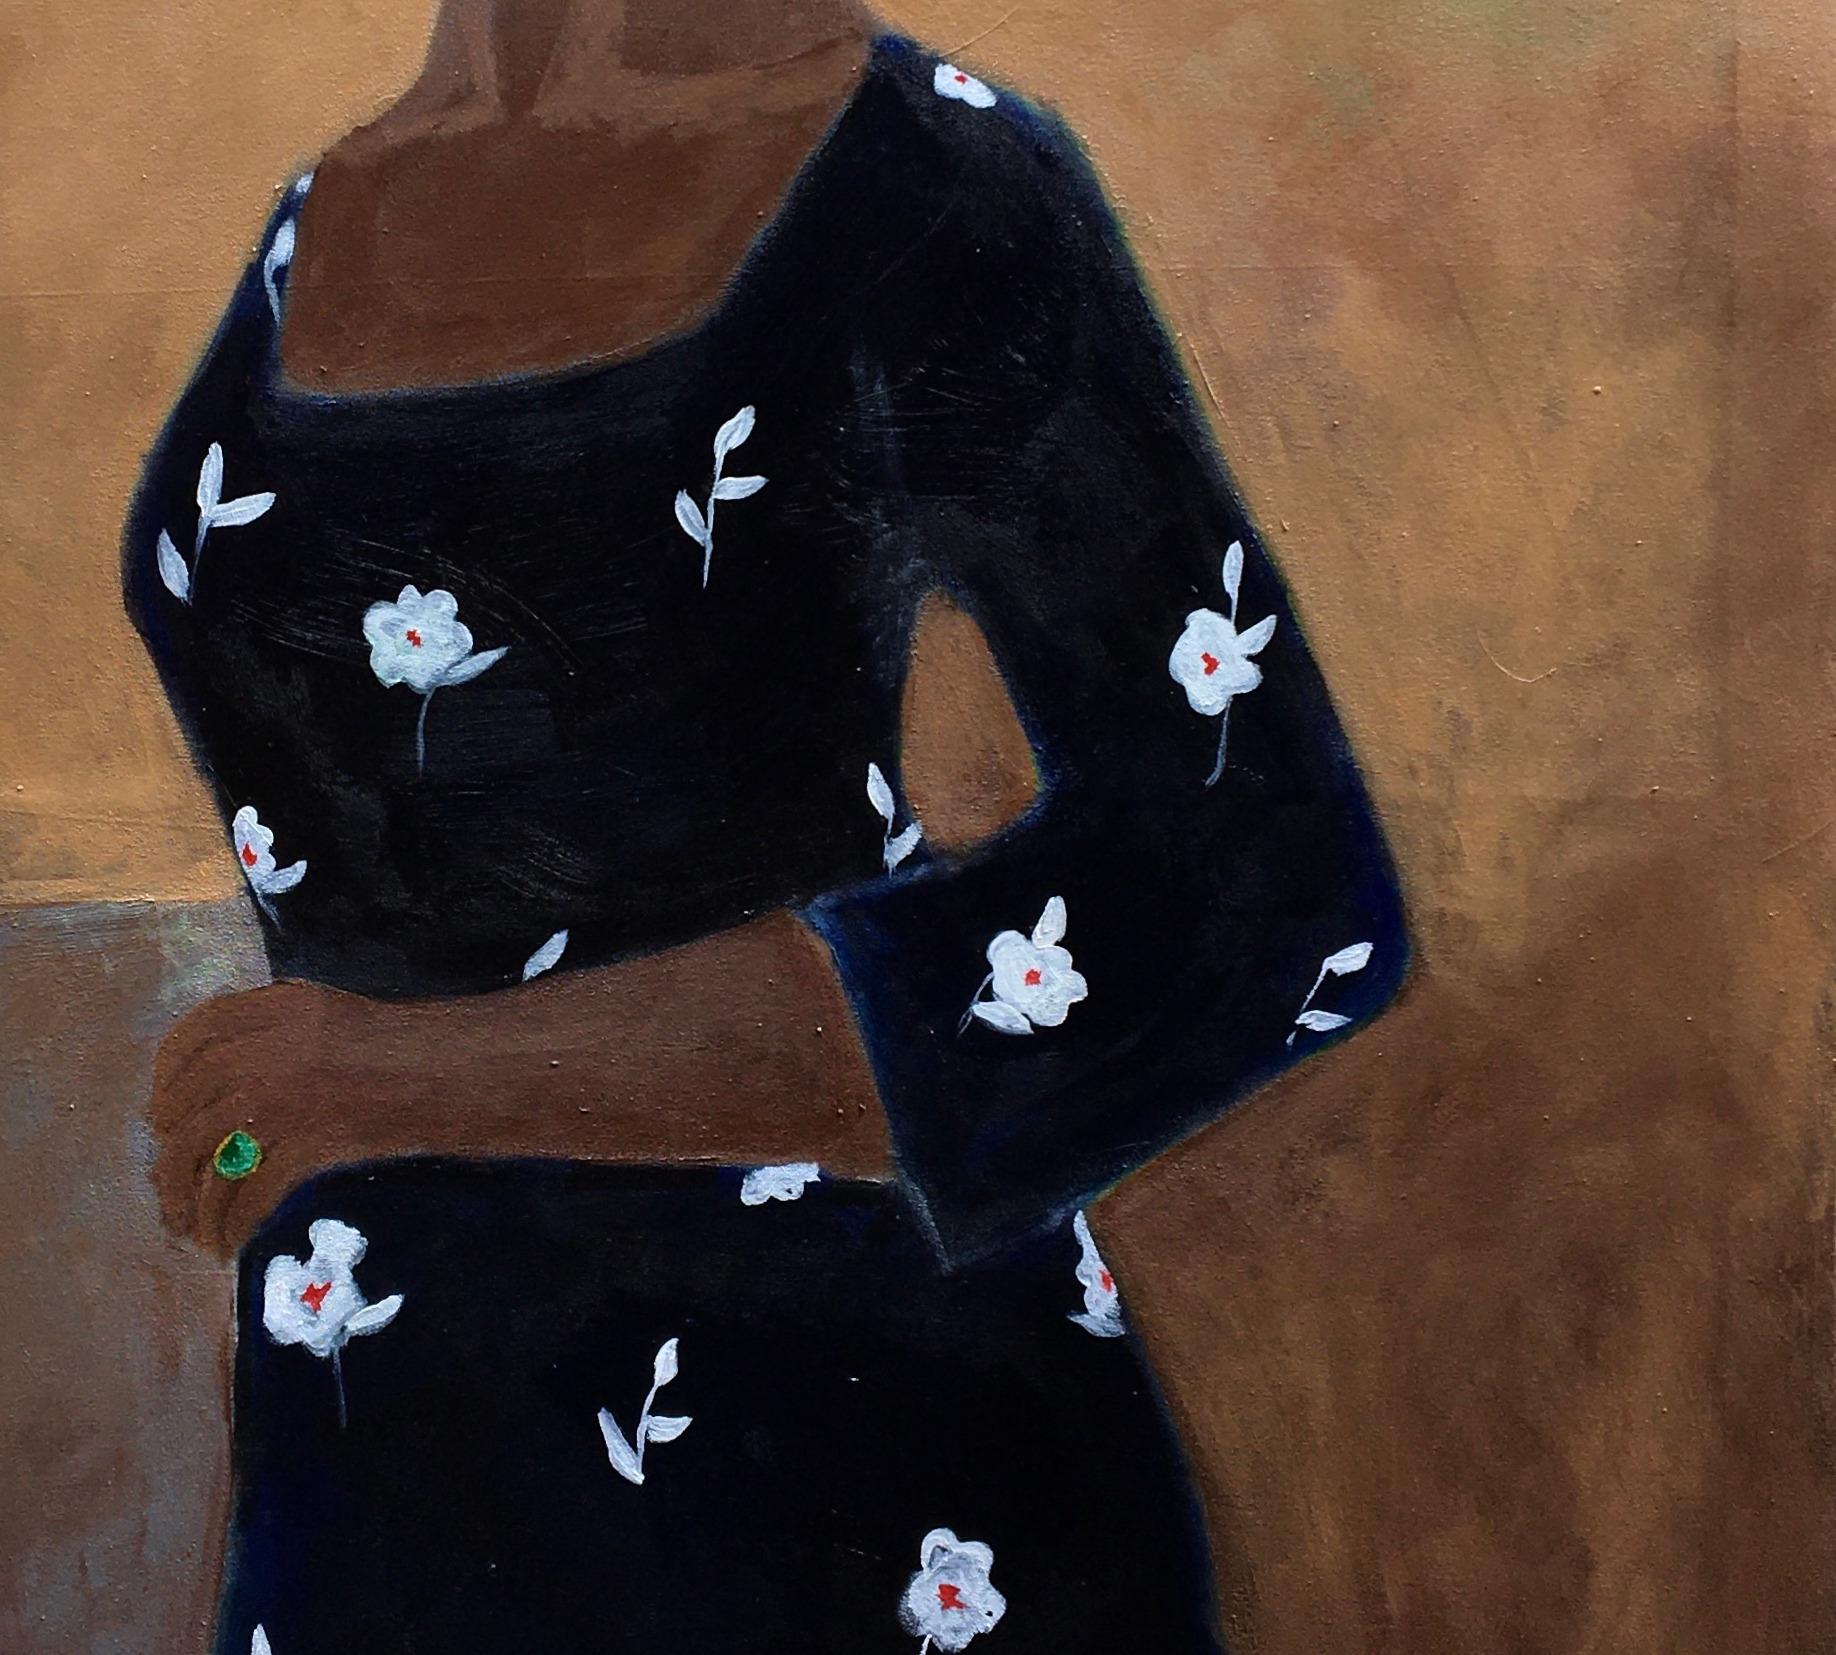 Untitled 1 - Black Portrait Painting by Wisdom Uche